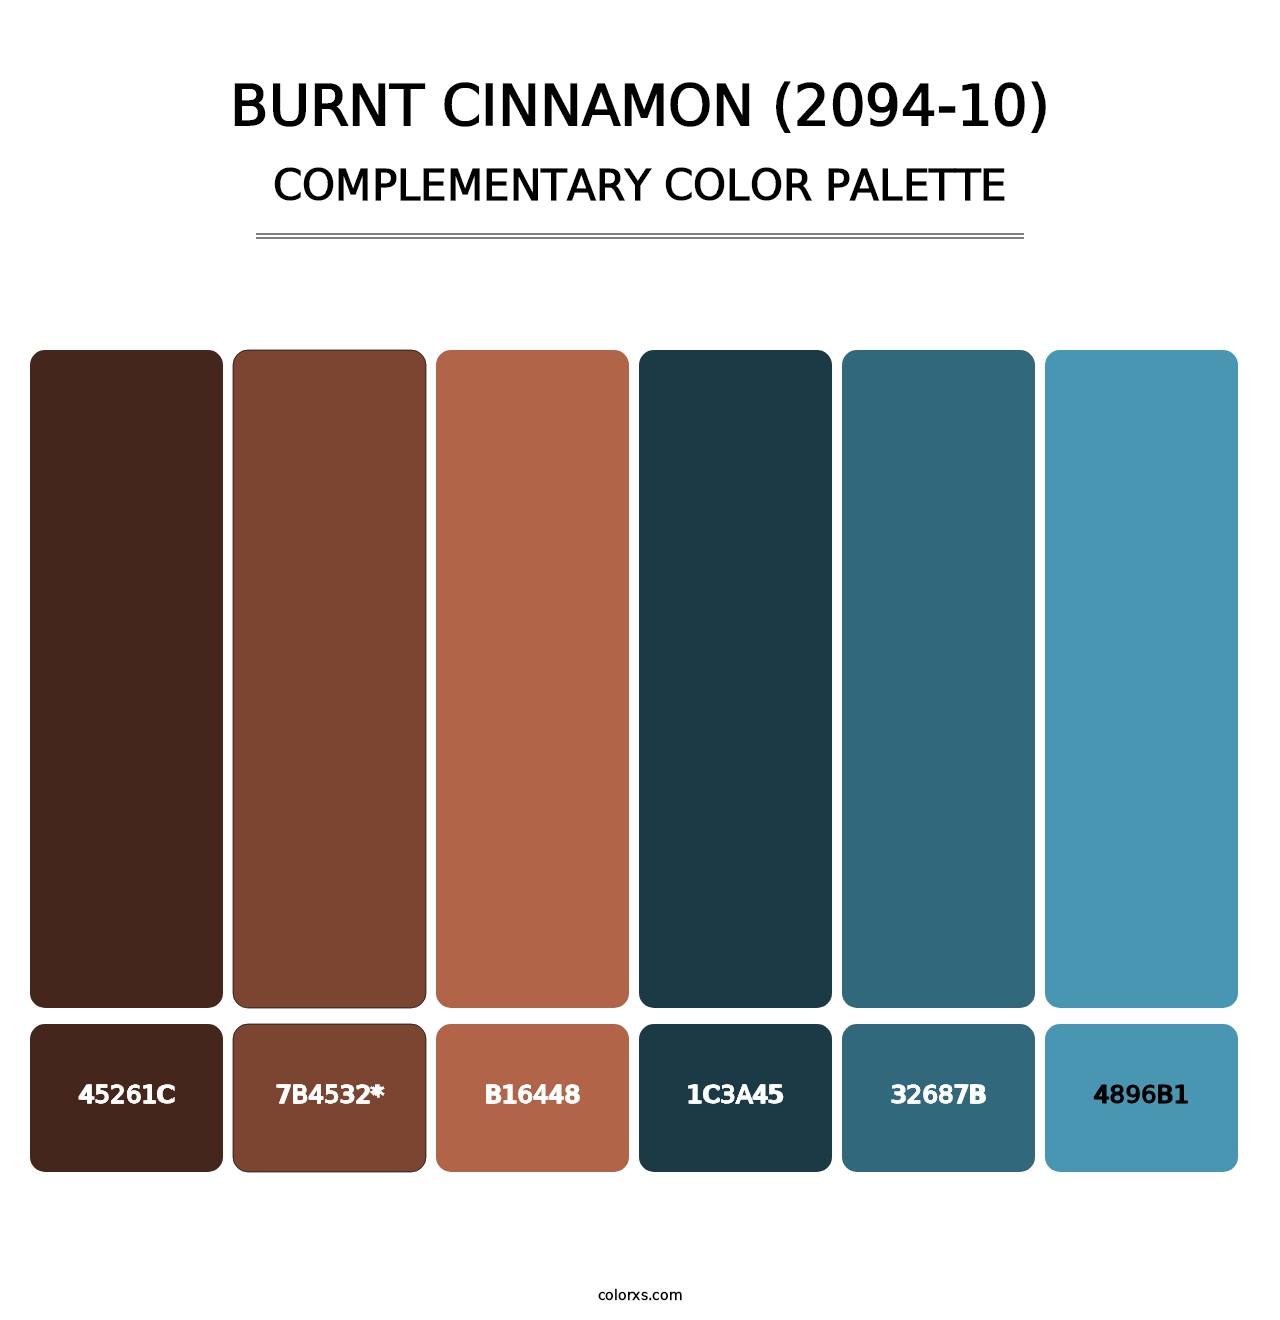 Burnt Cinnamon (2094-10) - Complementary Color Palette